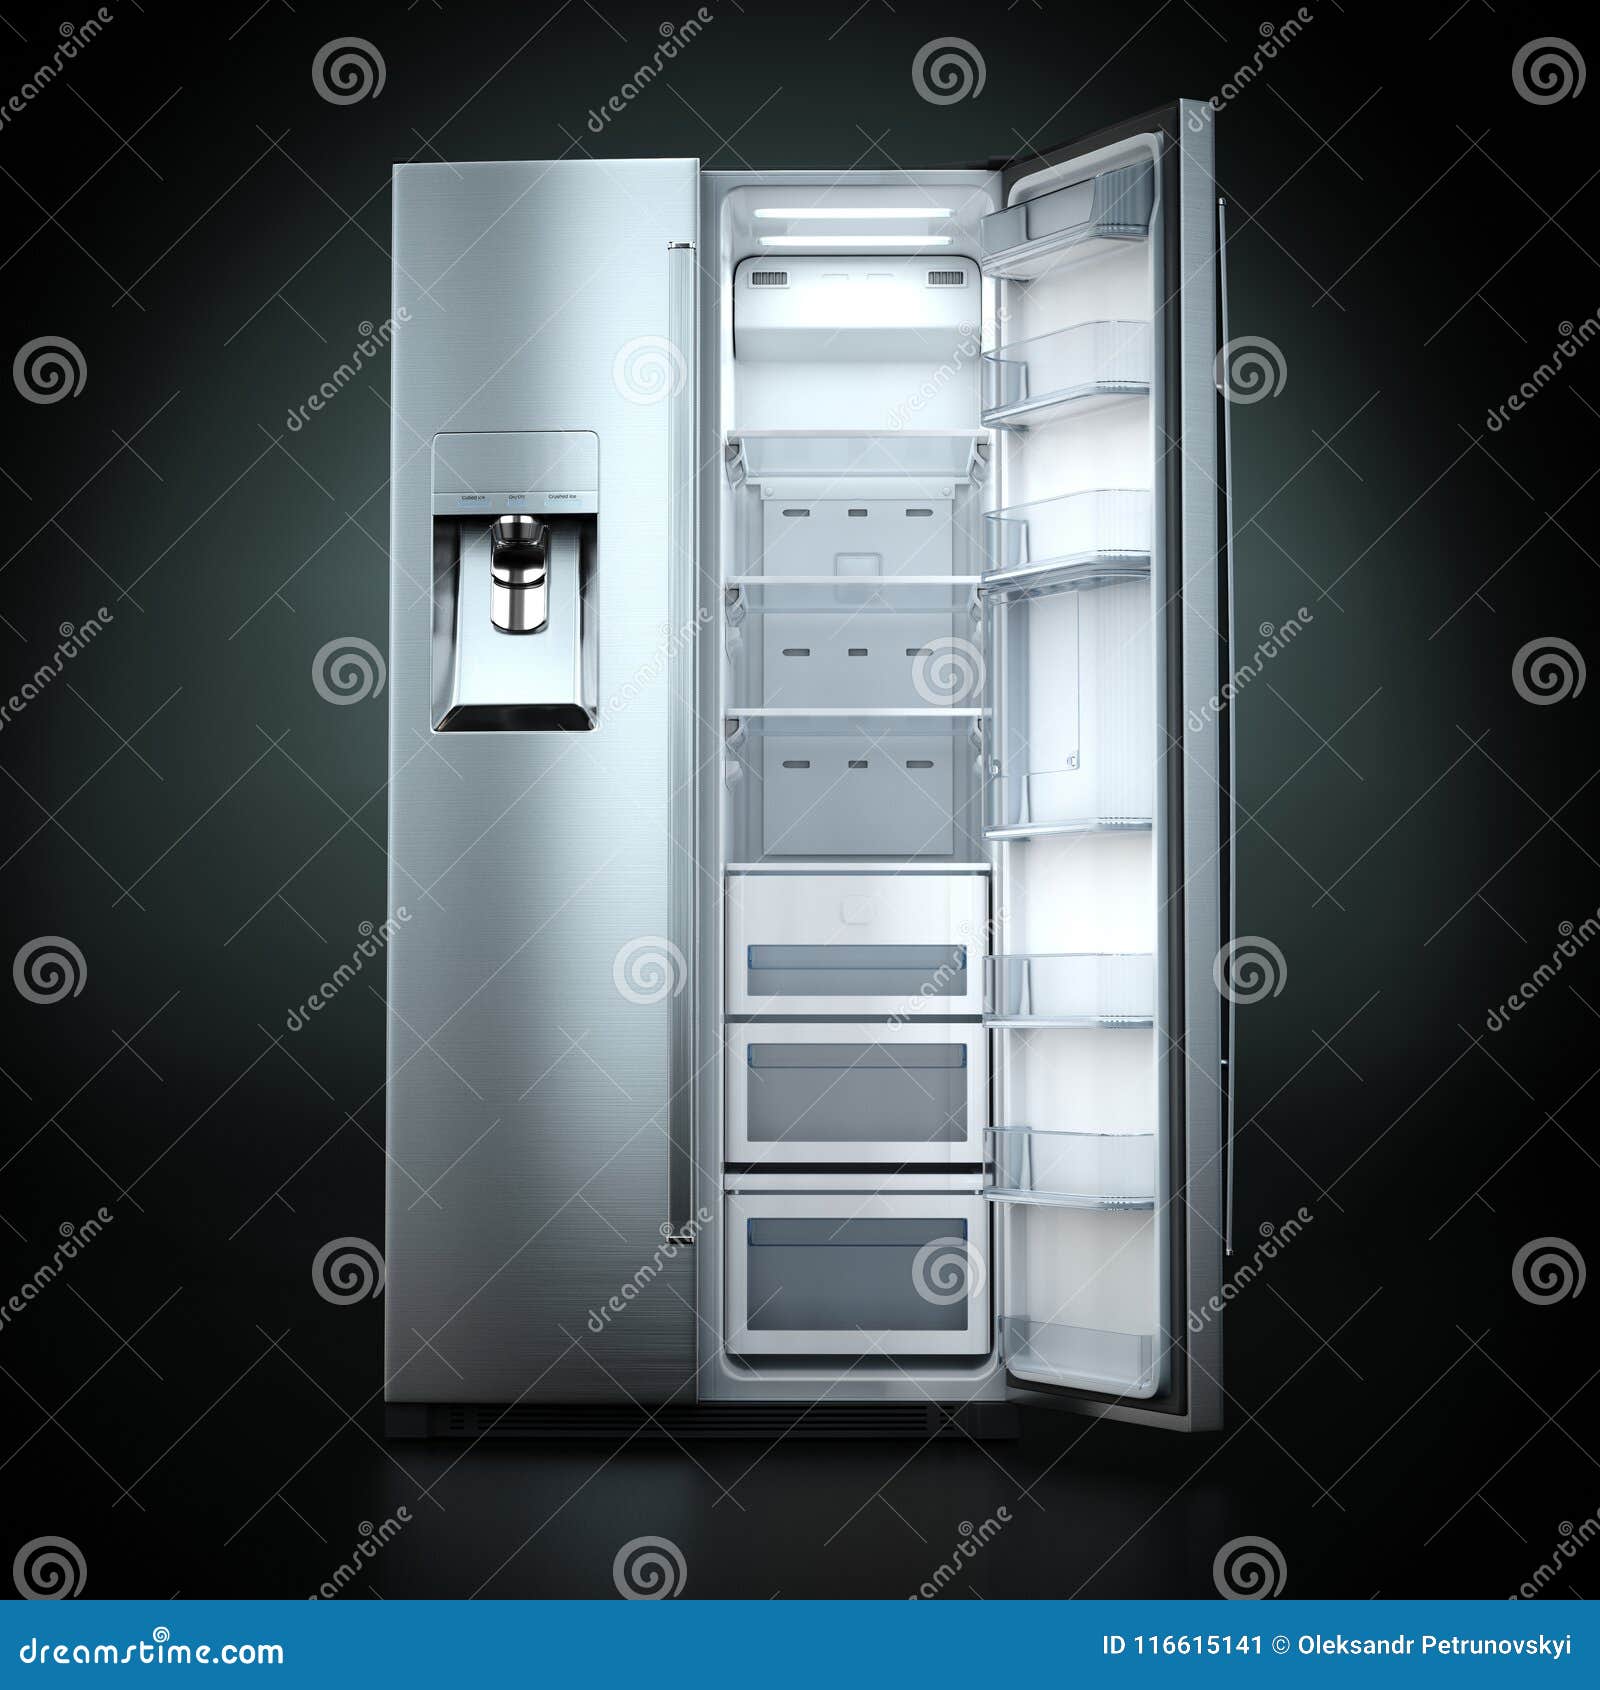 https://thumbs.dreamstime.com/z/d-que-rinde-el-refrigerador-grande-116615141.jpg